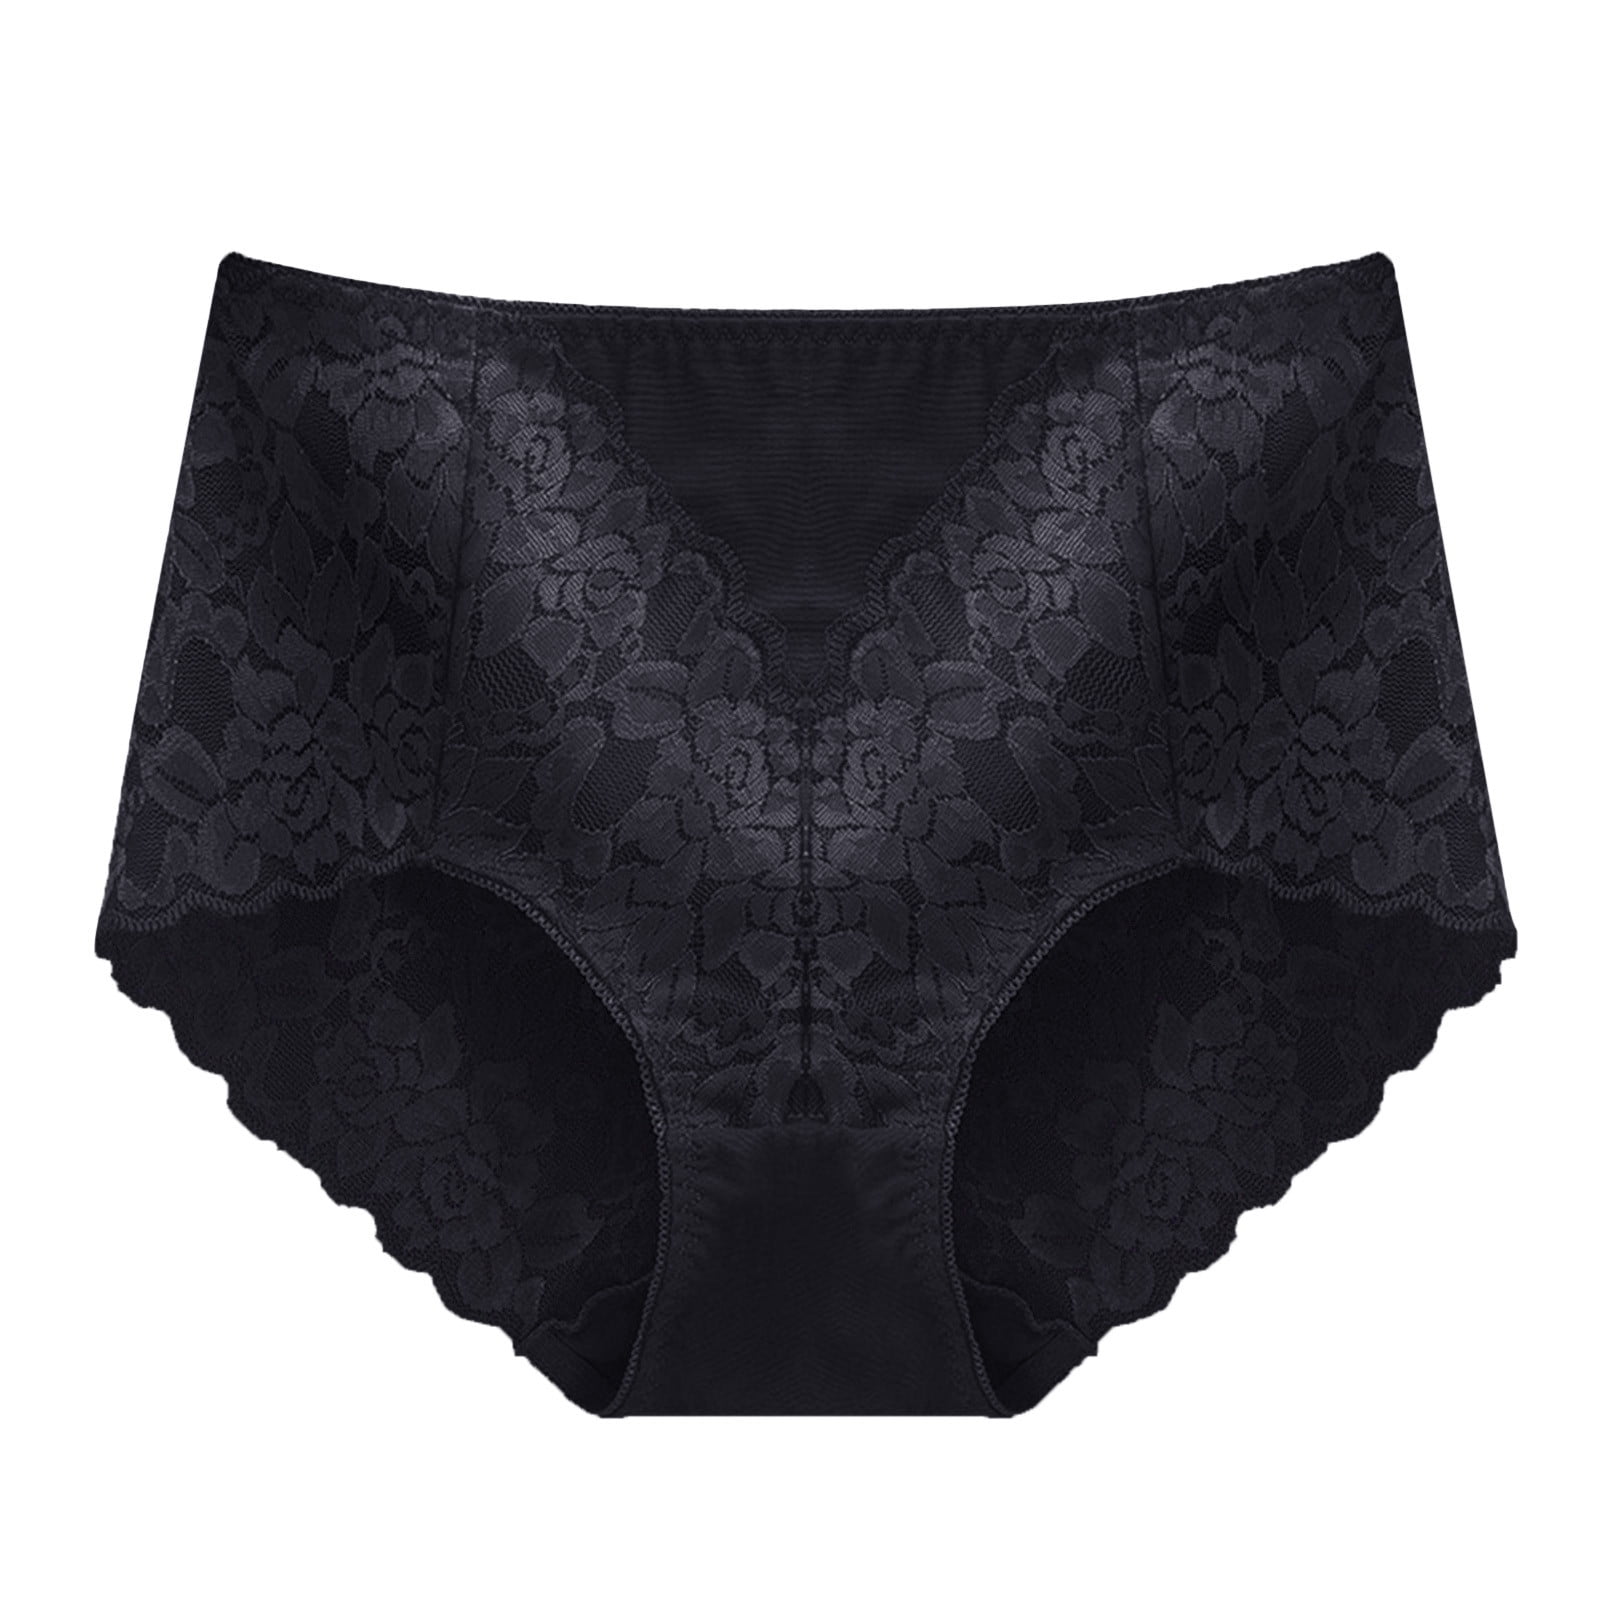 Bkolouuoe Variety Pack Panties for Women Women's Mid High Waist Lace  Panties Seamless Brief Briefs Underwear for Teens 